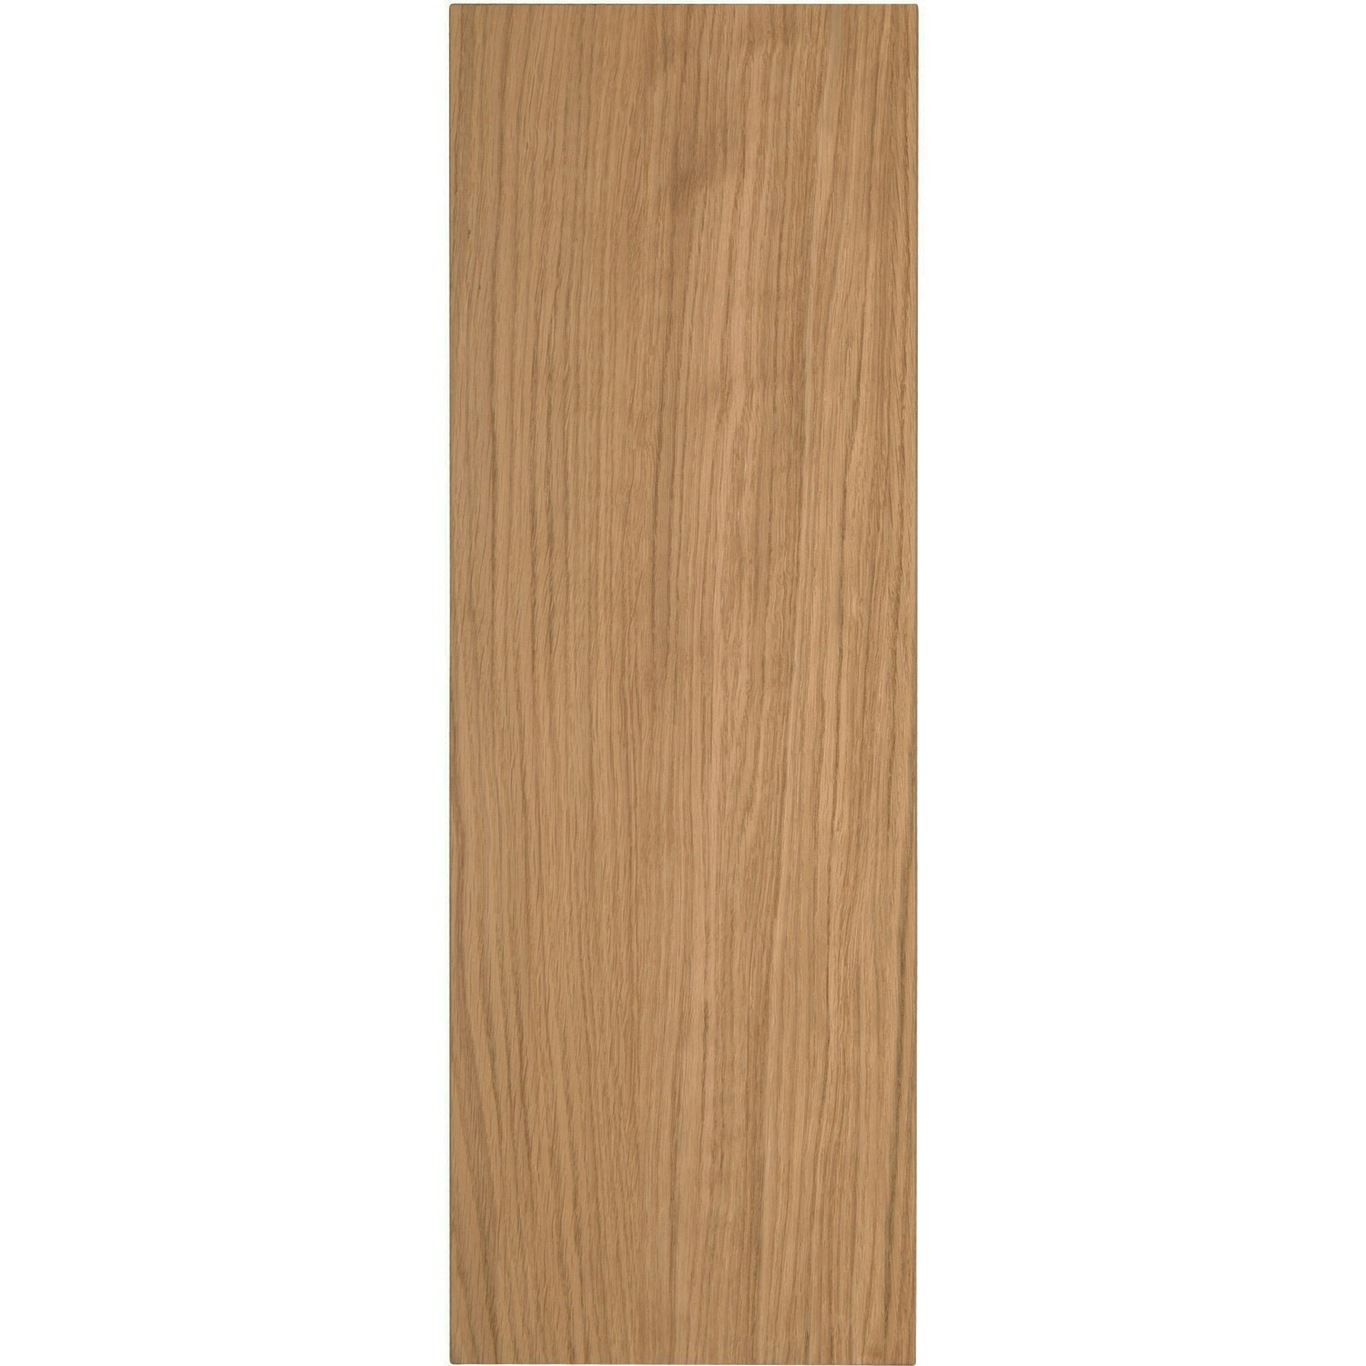 Pythagoras Plank 60 cm, Oak